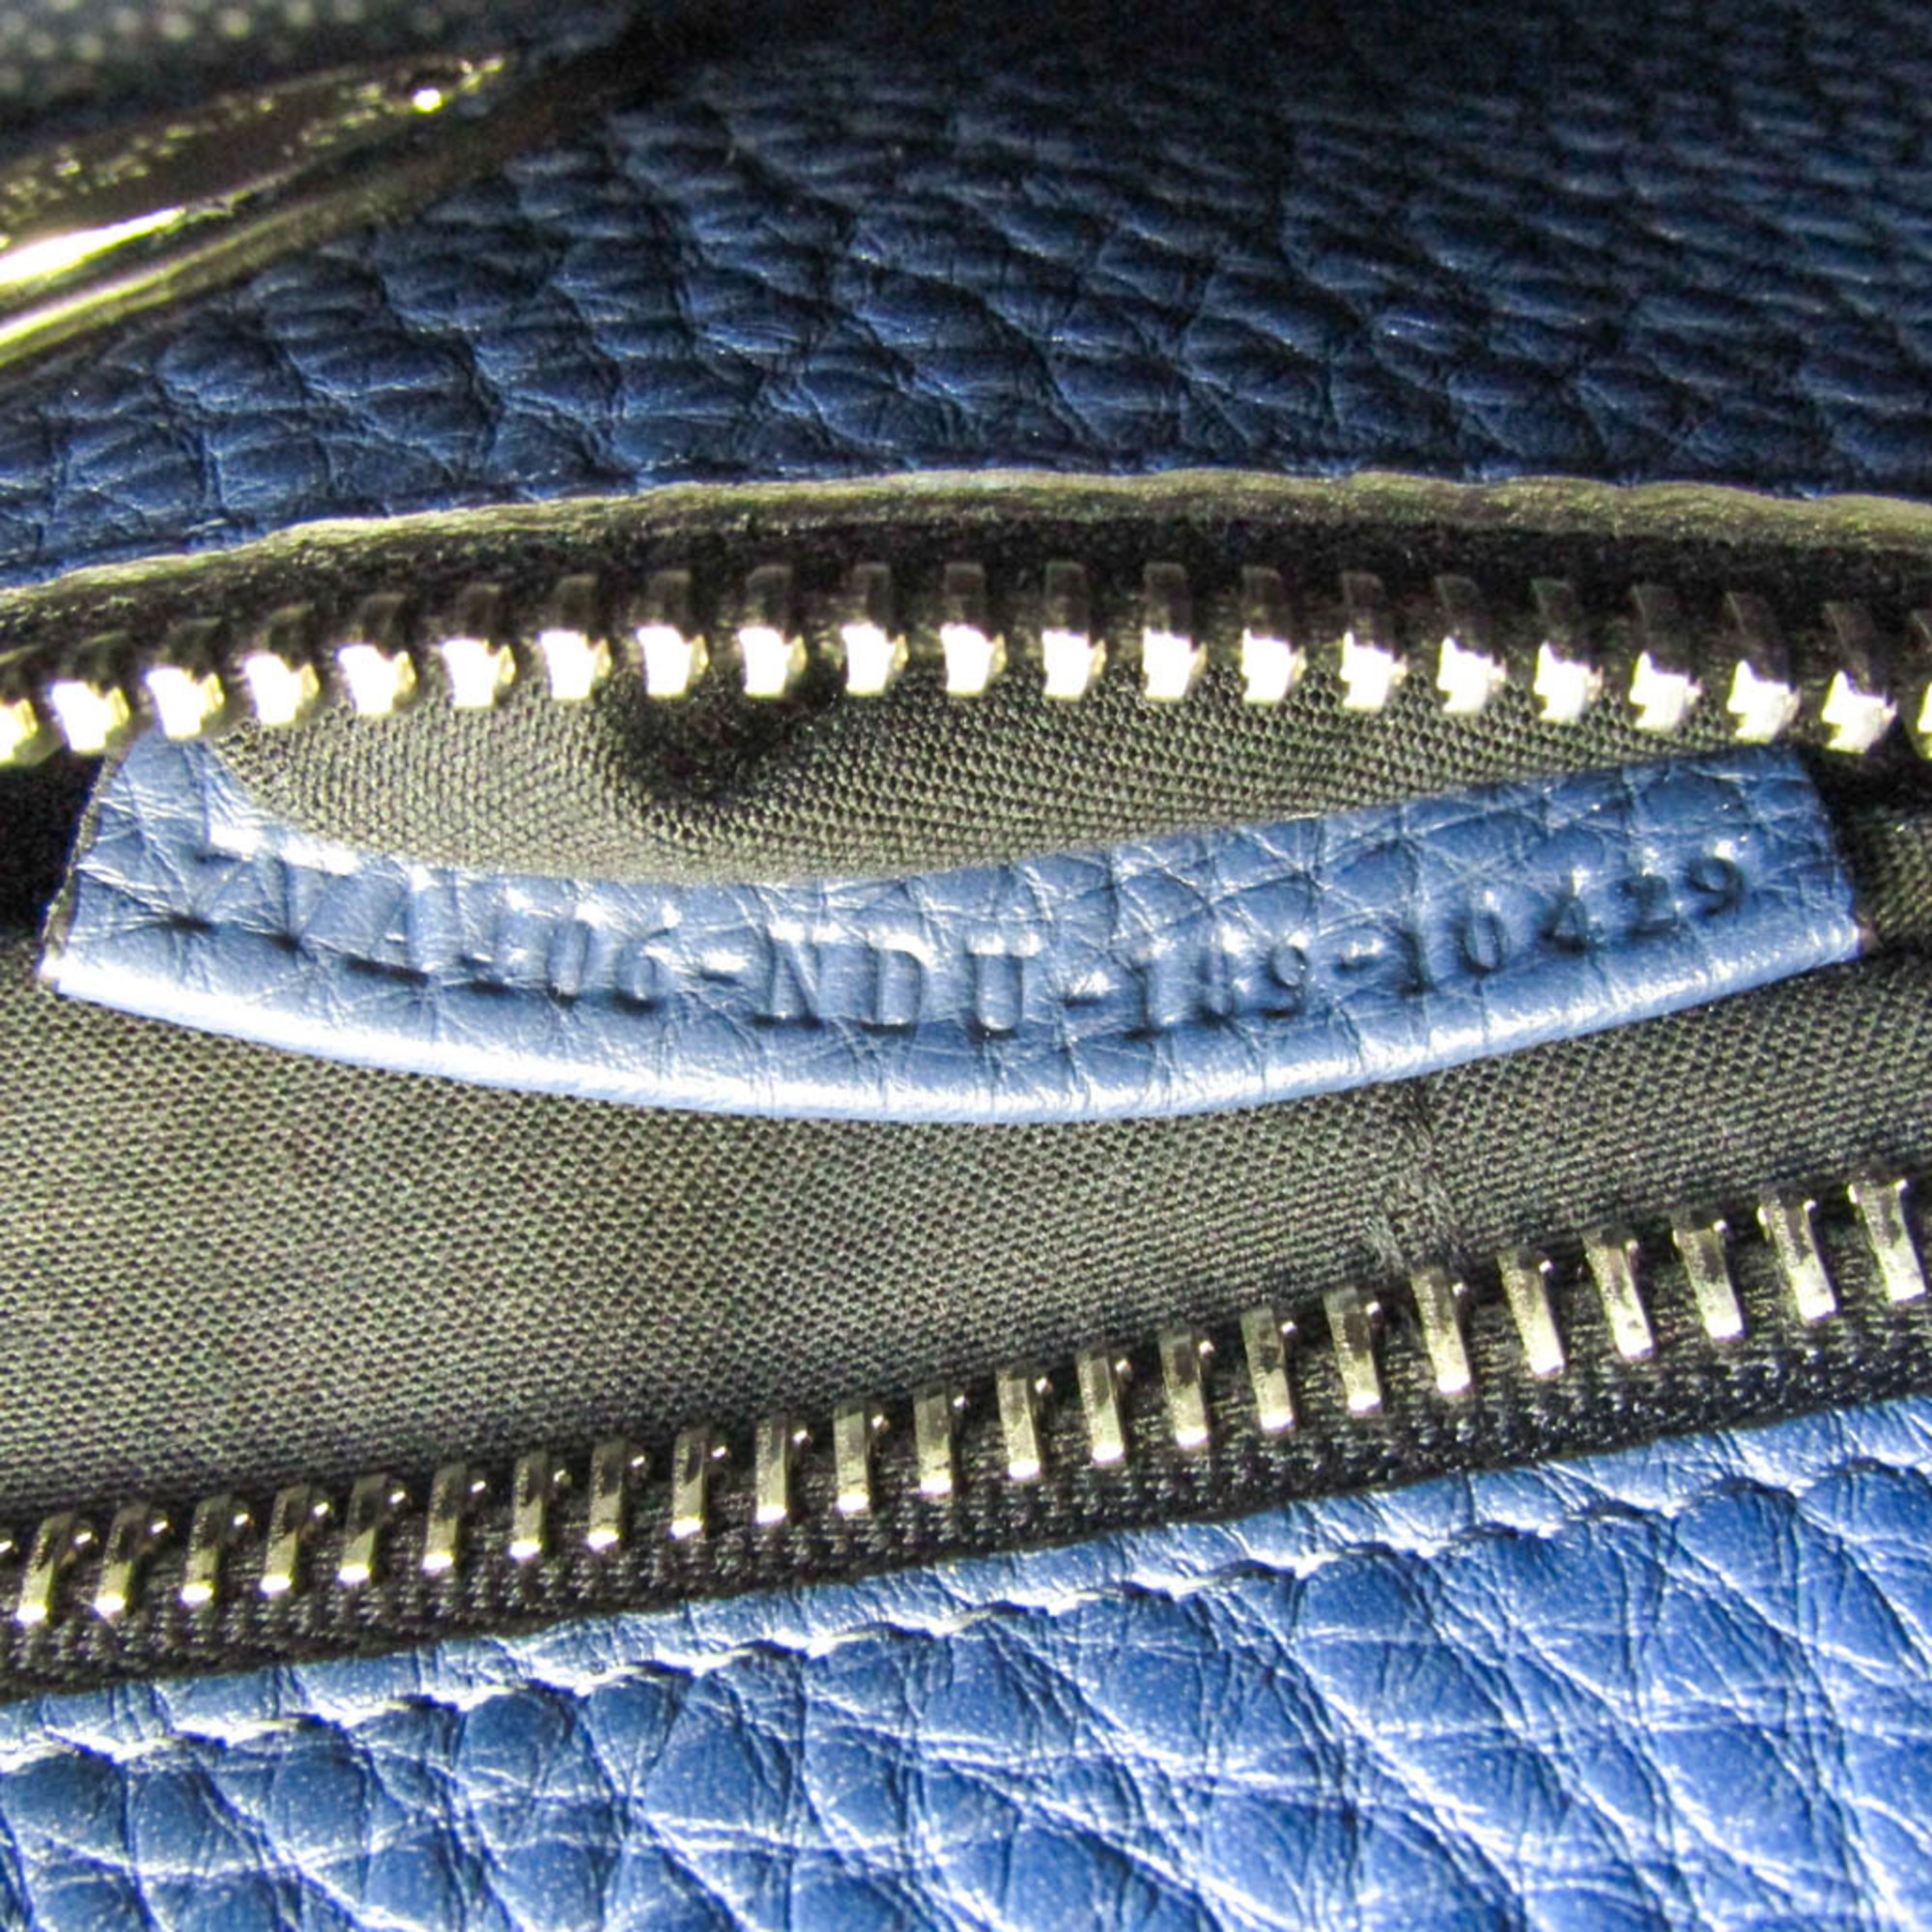 Fendi Selleria Peekaboo Fit 7VA406 Men's Leather Briefcase,Shoulder Bag Navy